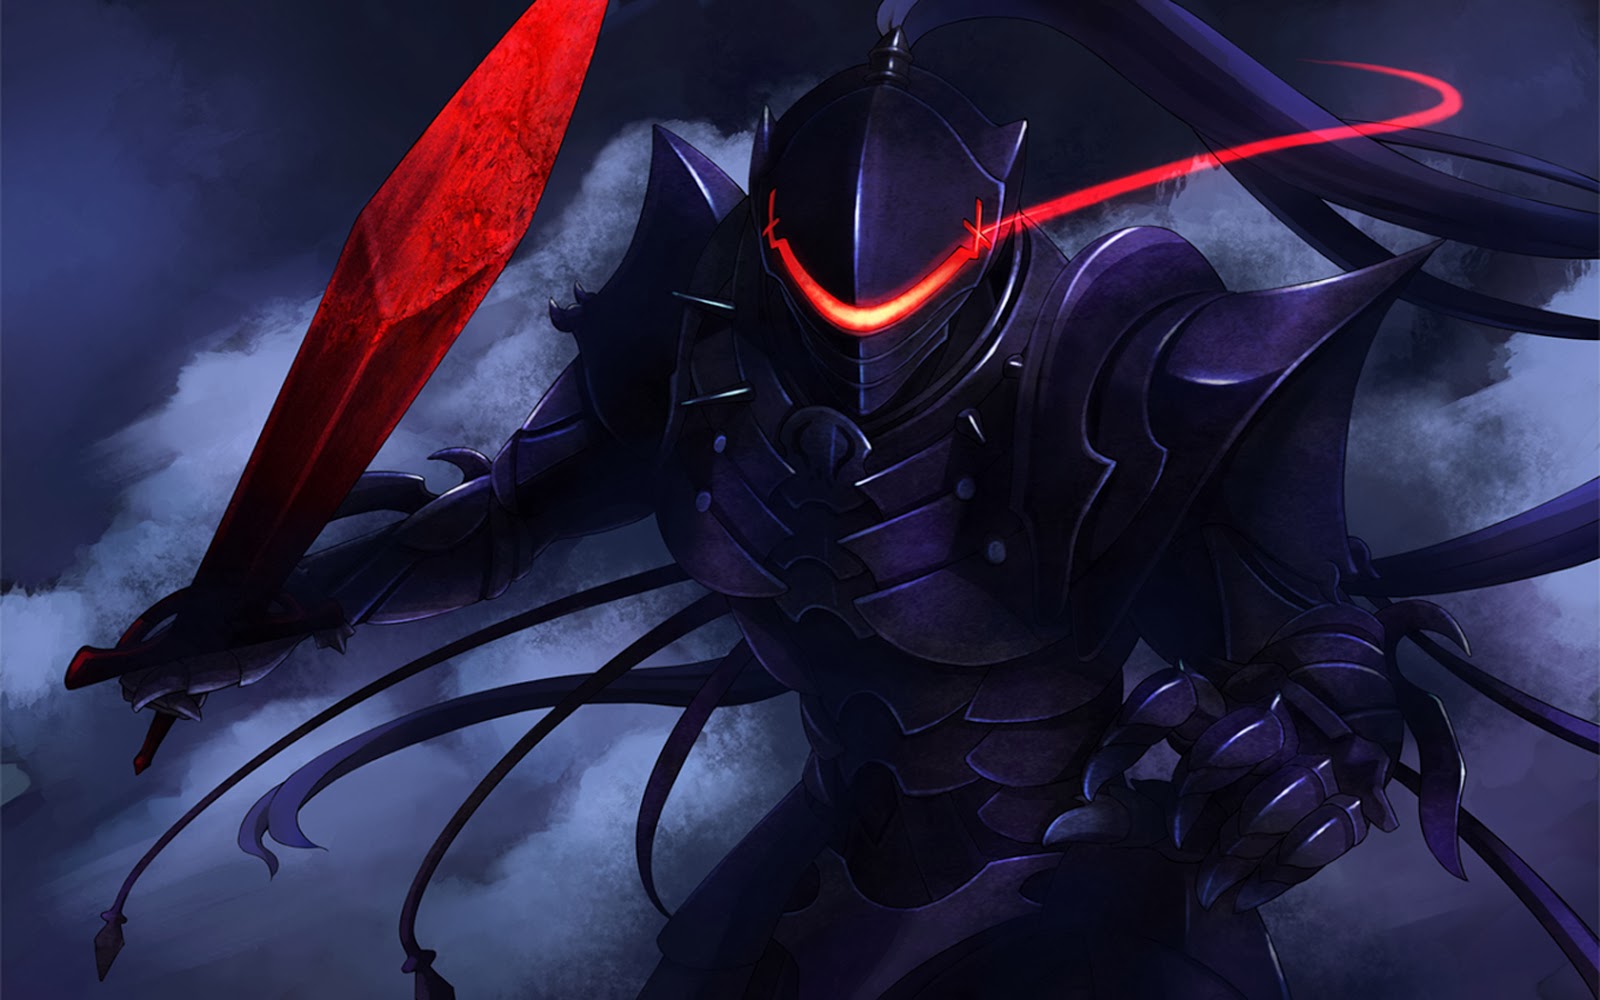 berserker-fate-stay-night-wallpaper-hd-black-armor-knight-sword-1680x1050.jpg